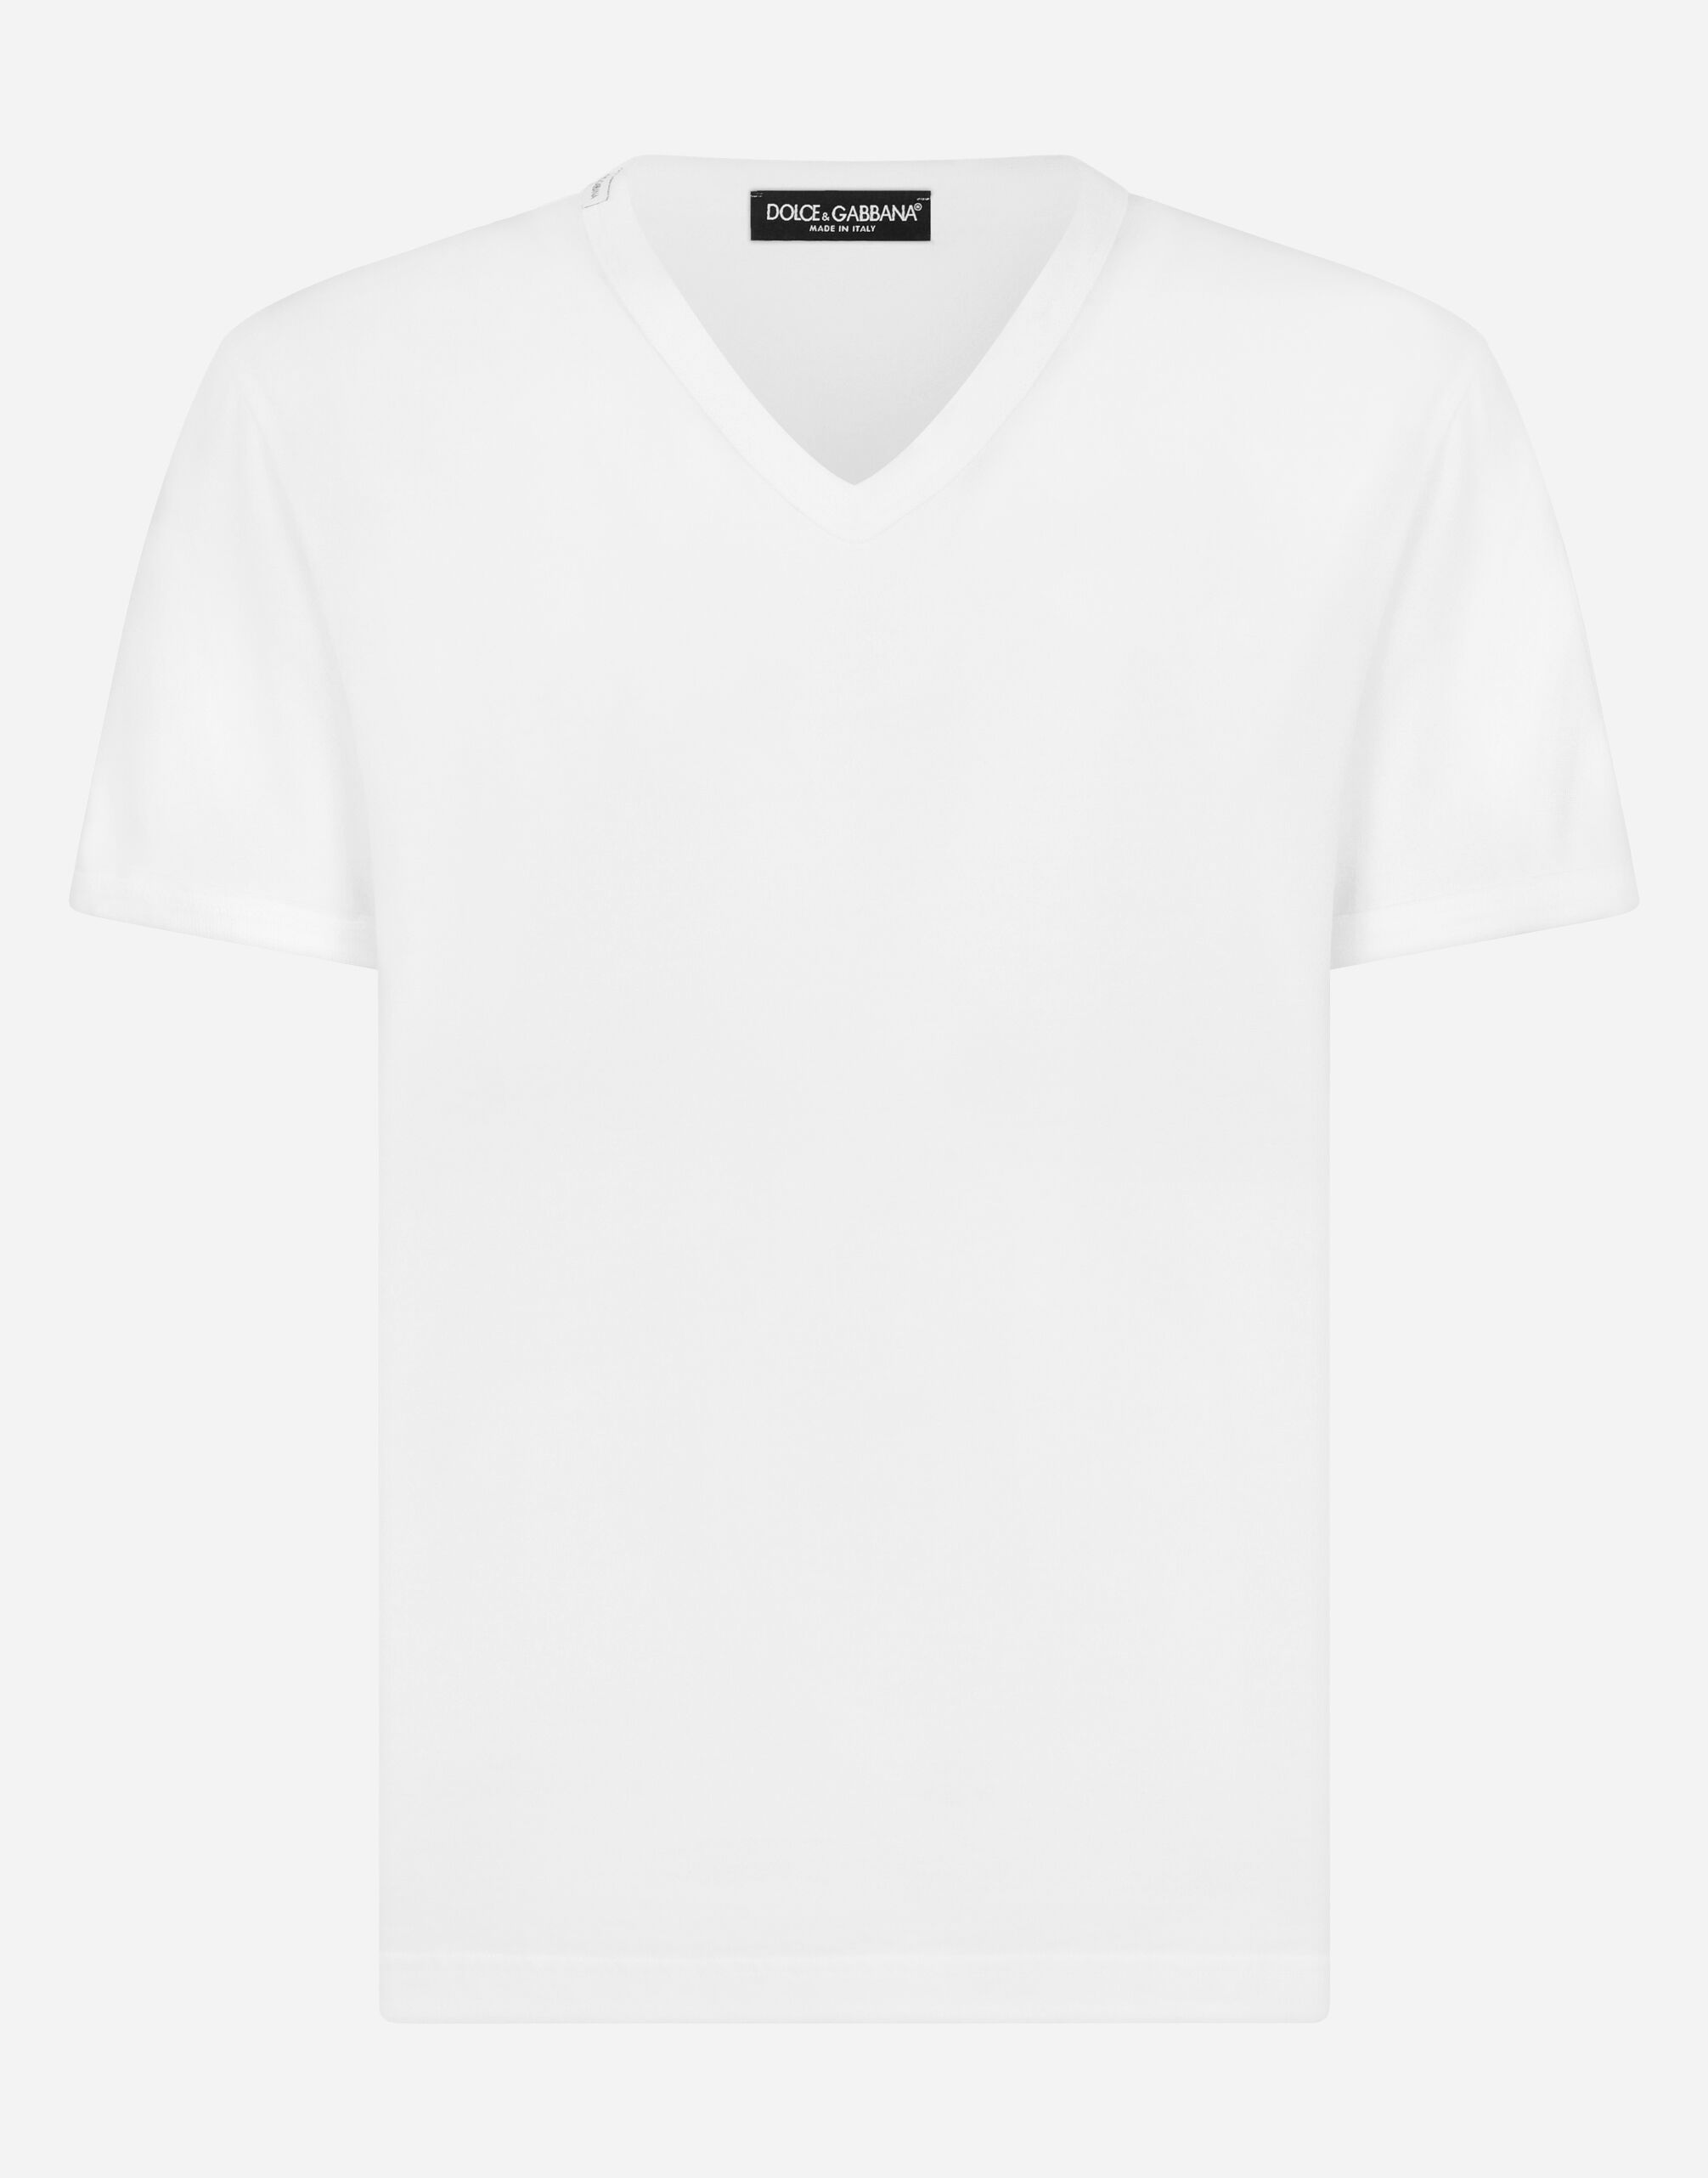 Dolce&Gabbana Cotton t-shirt Black GY6IETFUFJR